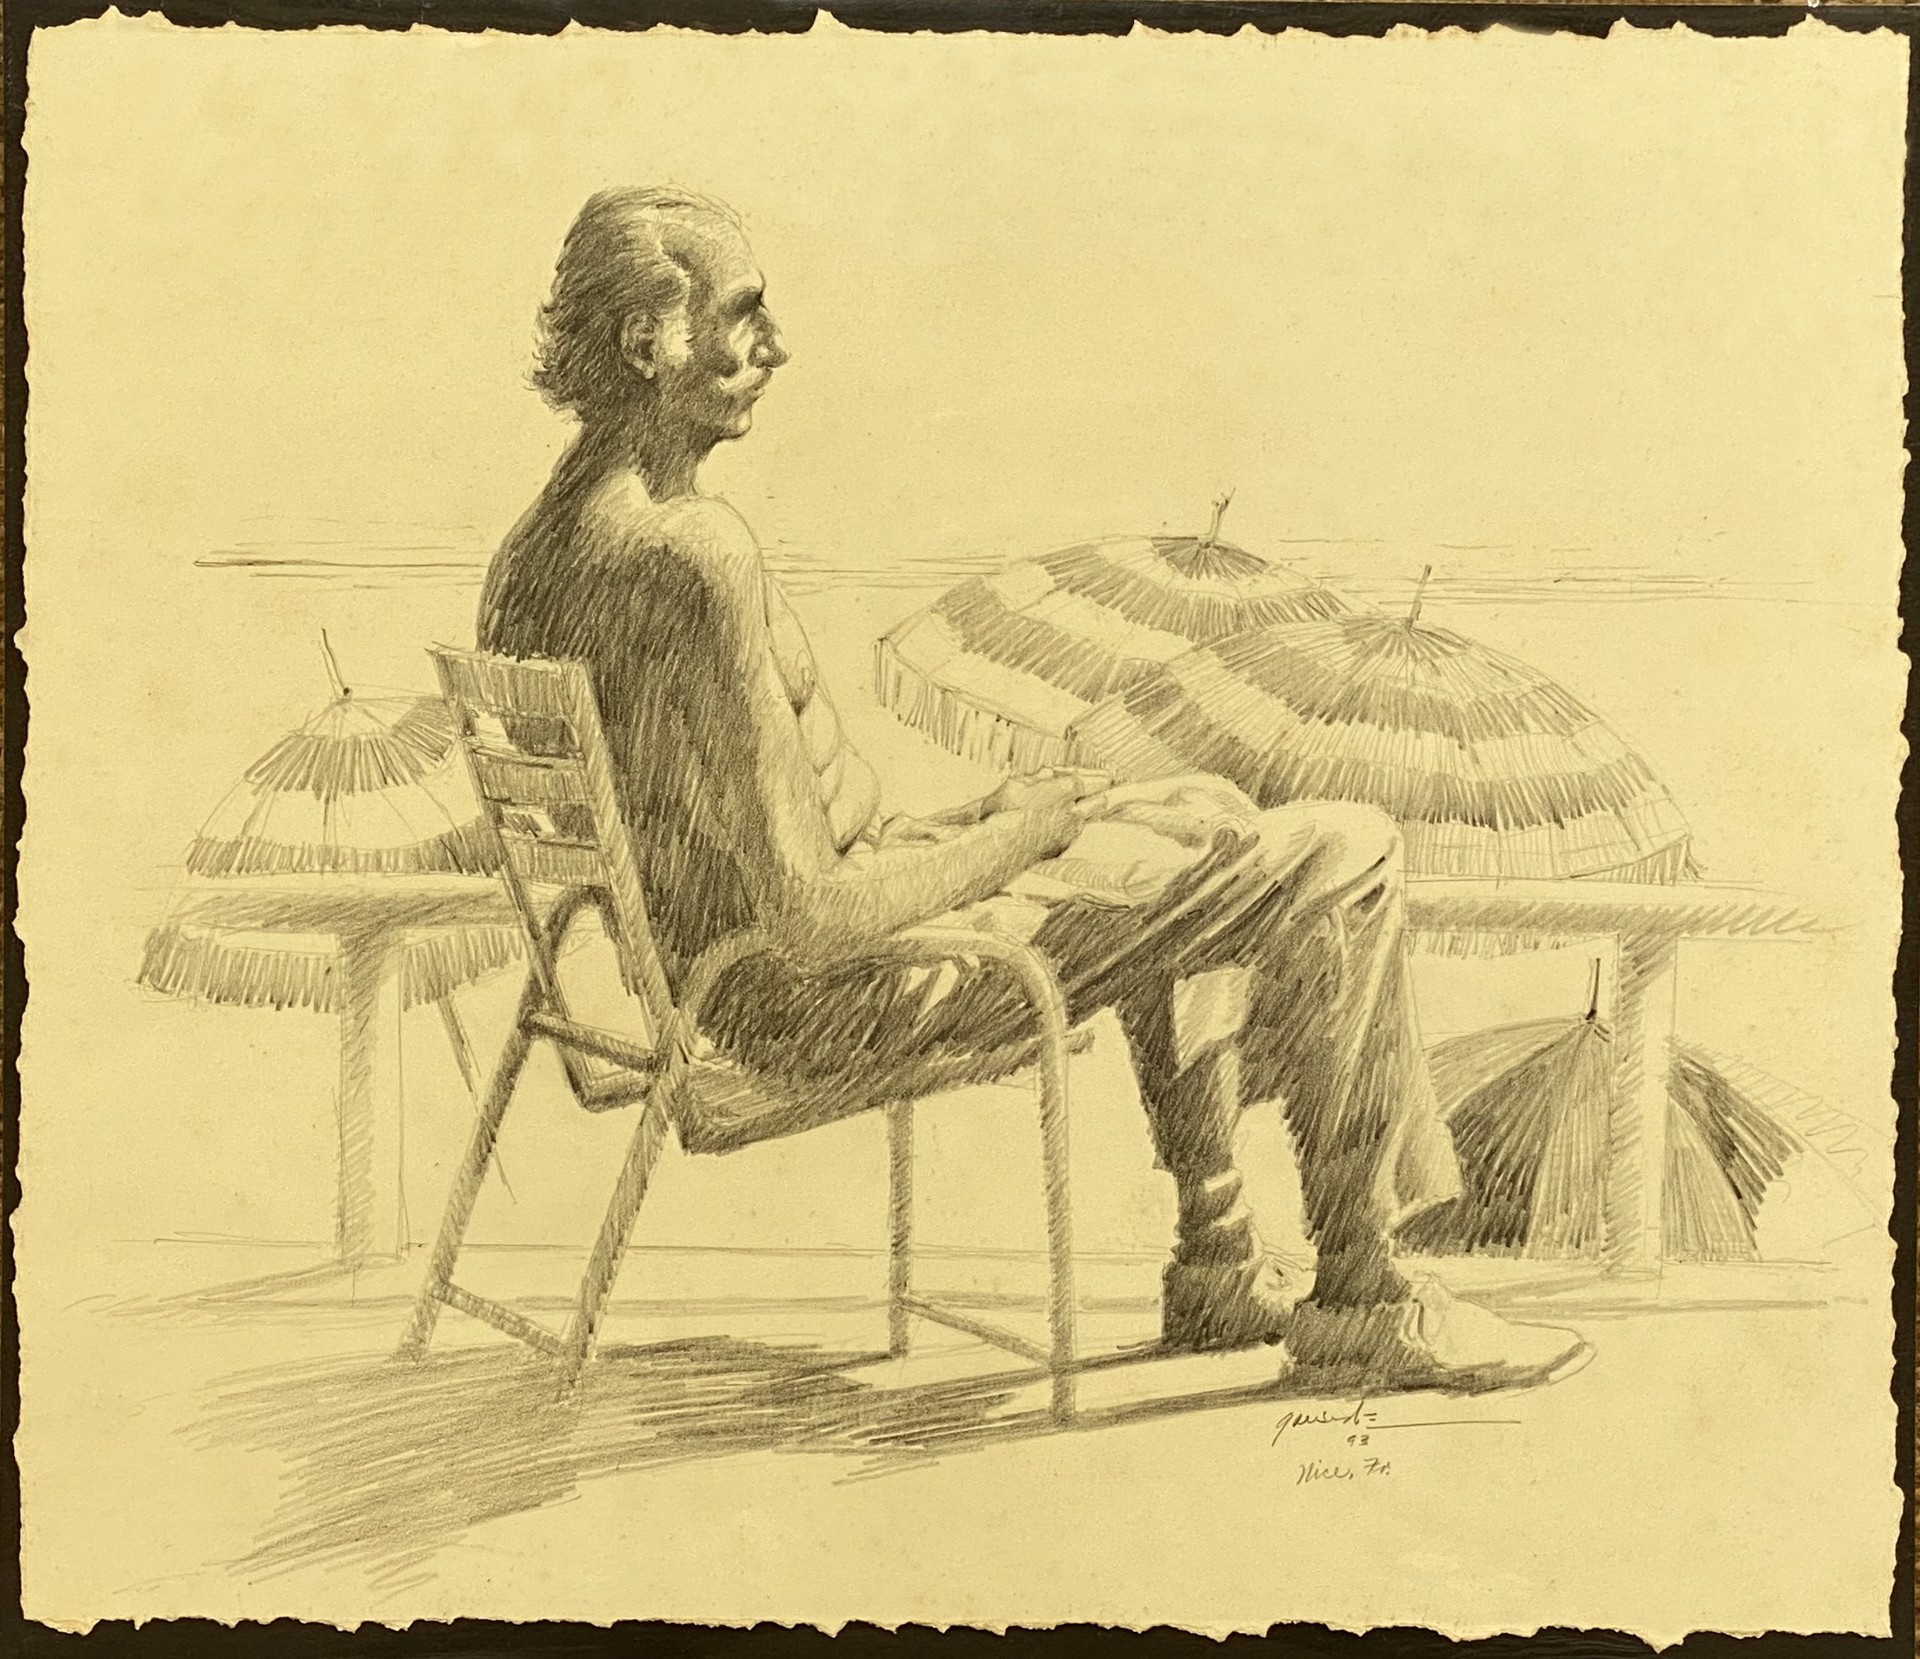 Soaking in the Sun by A. LaMoyne Garside